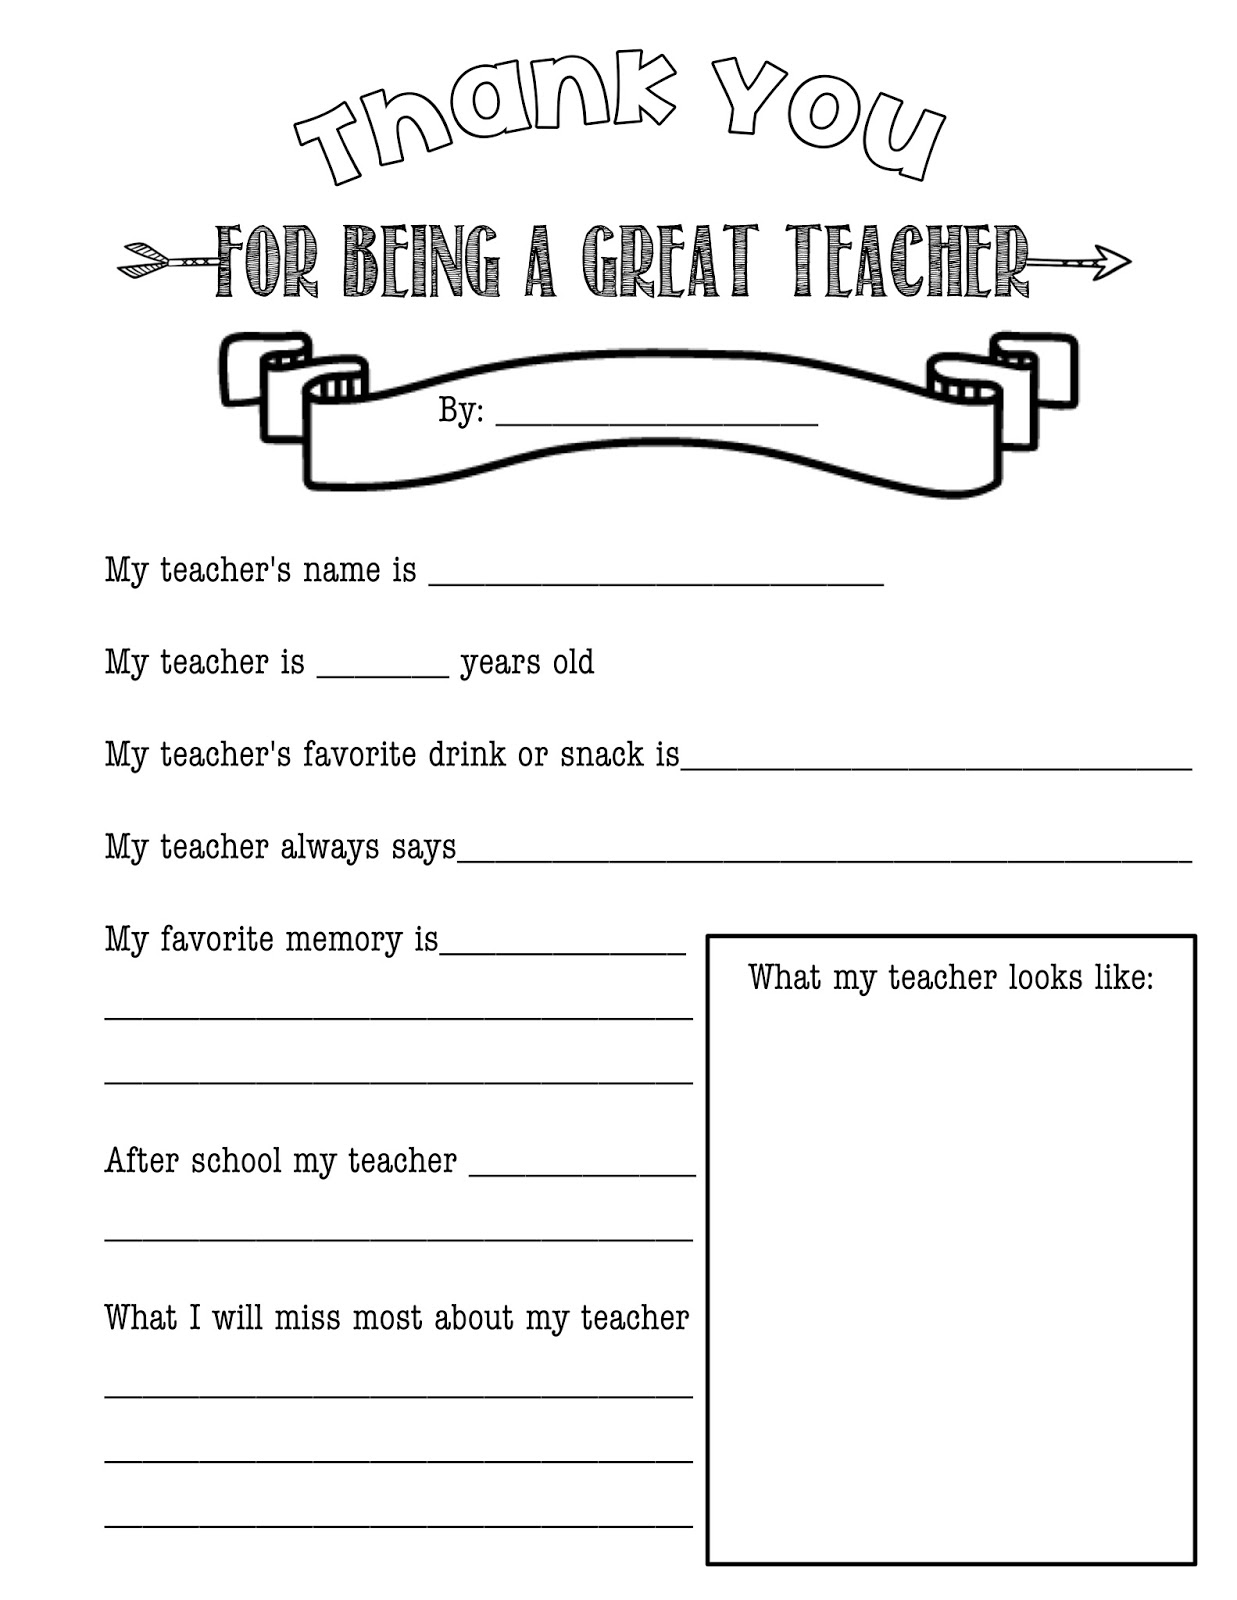 FREE teacher questionnaire